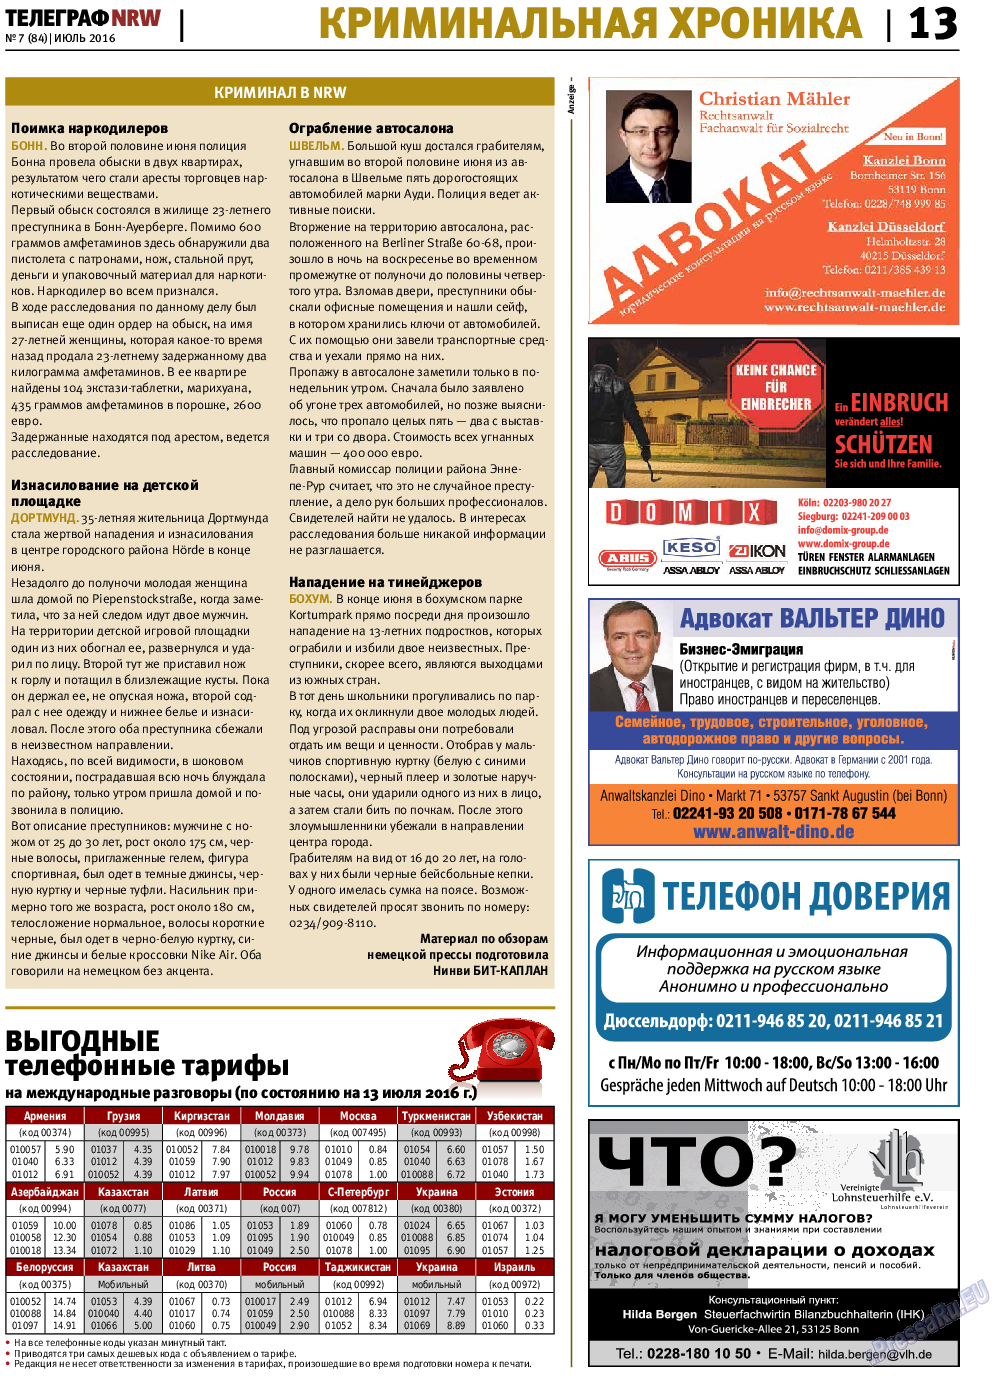 Телеграф NRW, газета. 2016 №7 стр.13